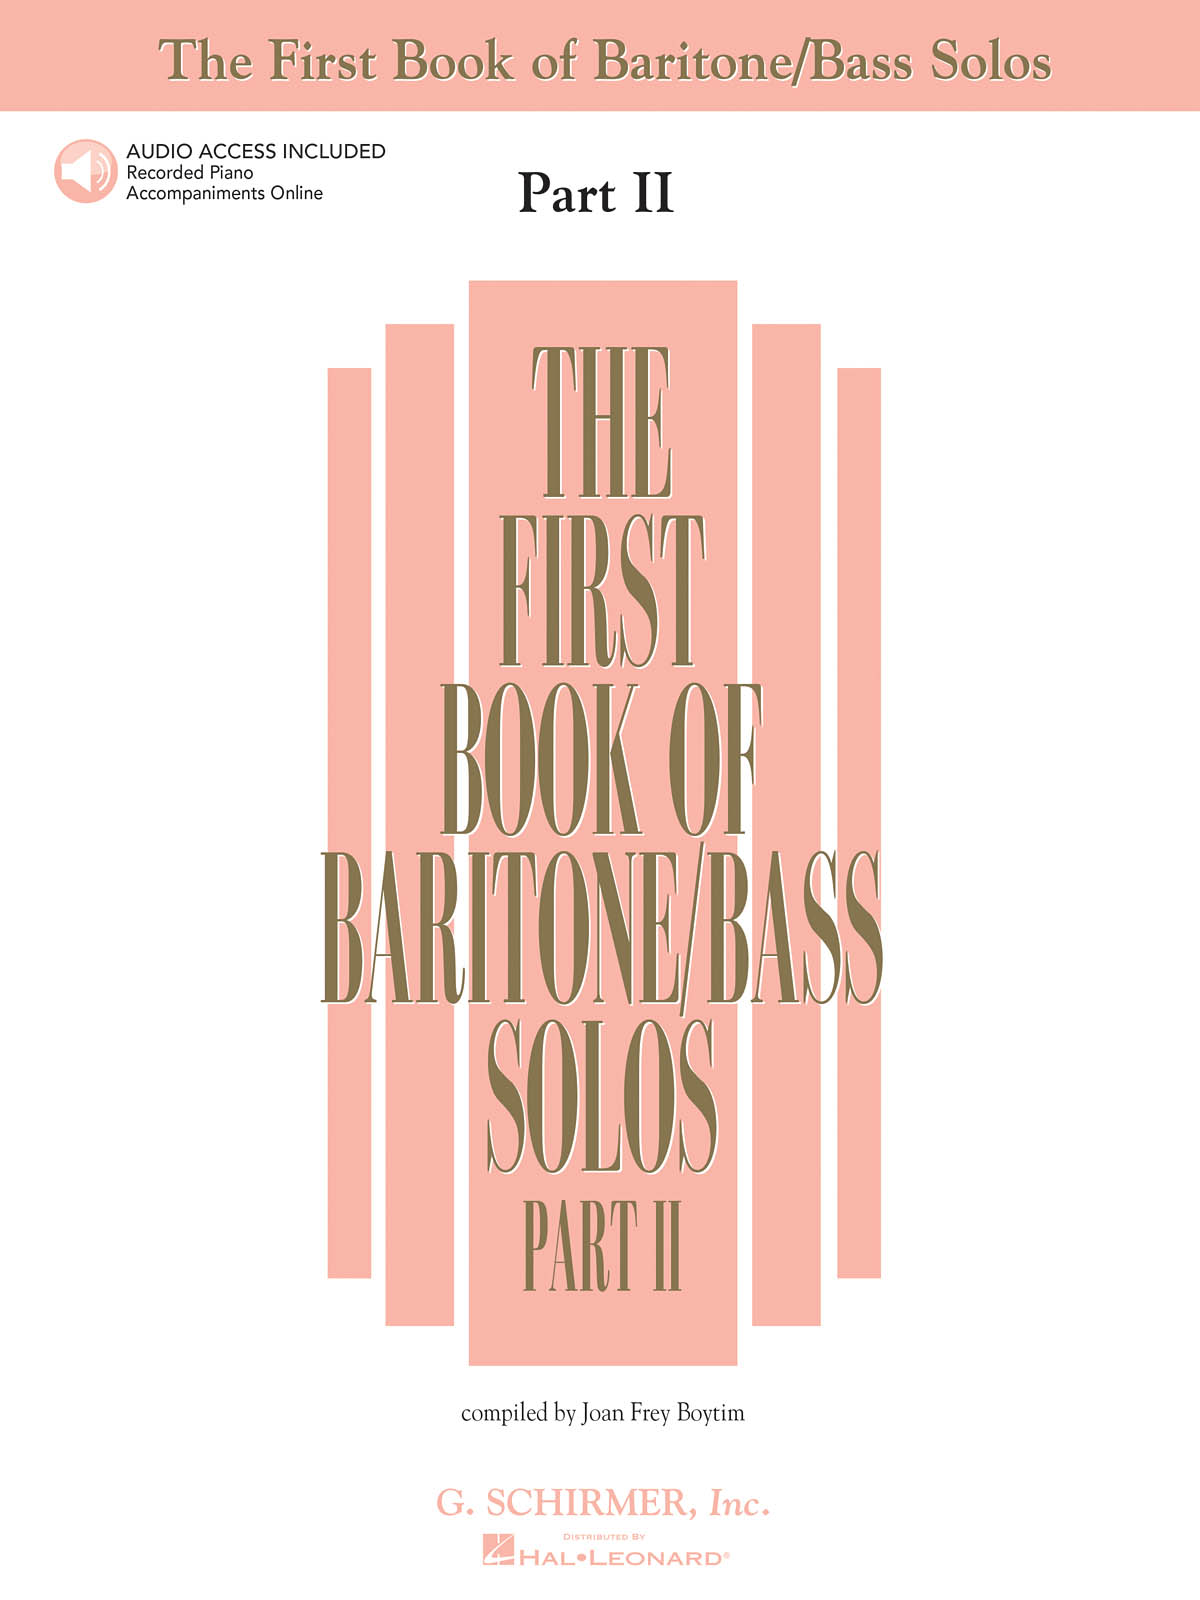 The First Book of Baritone/Bass Solos - Part II: Baritone Voice: Vocal Album